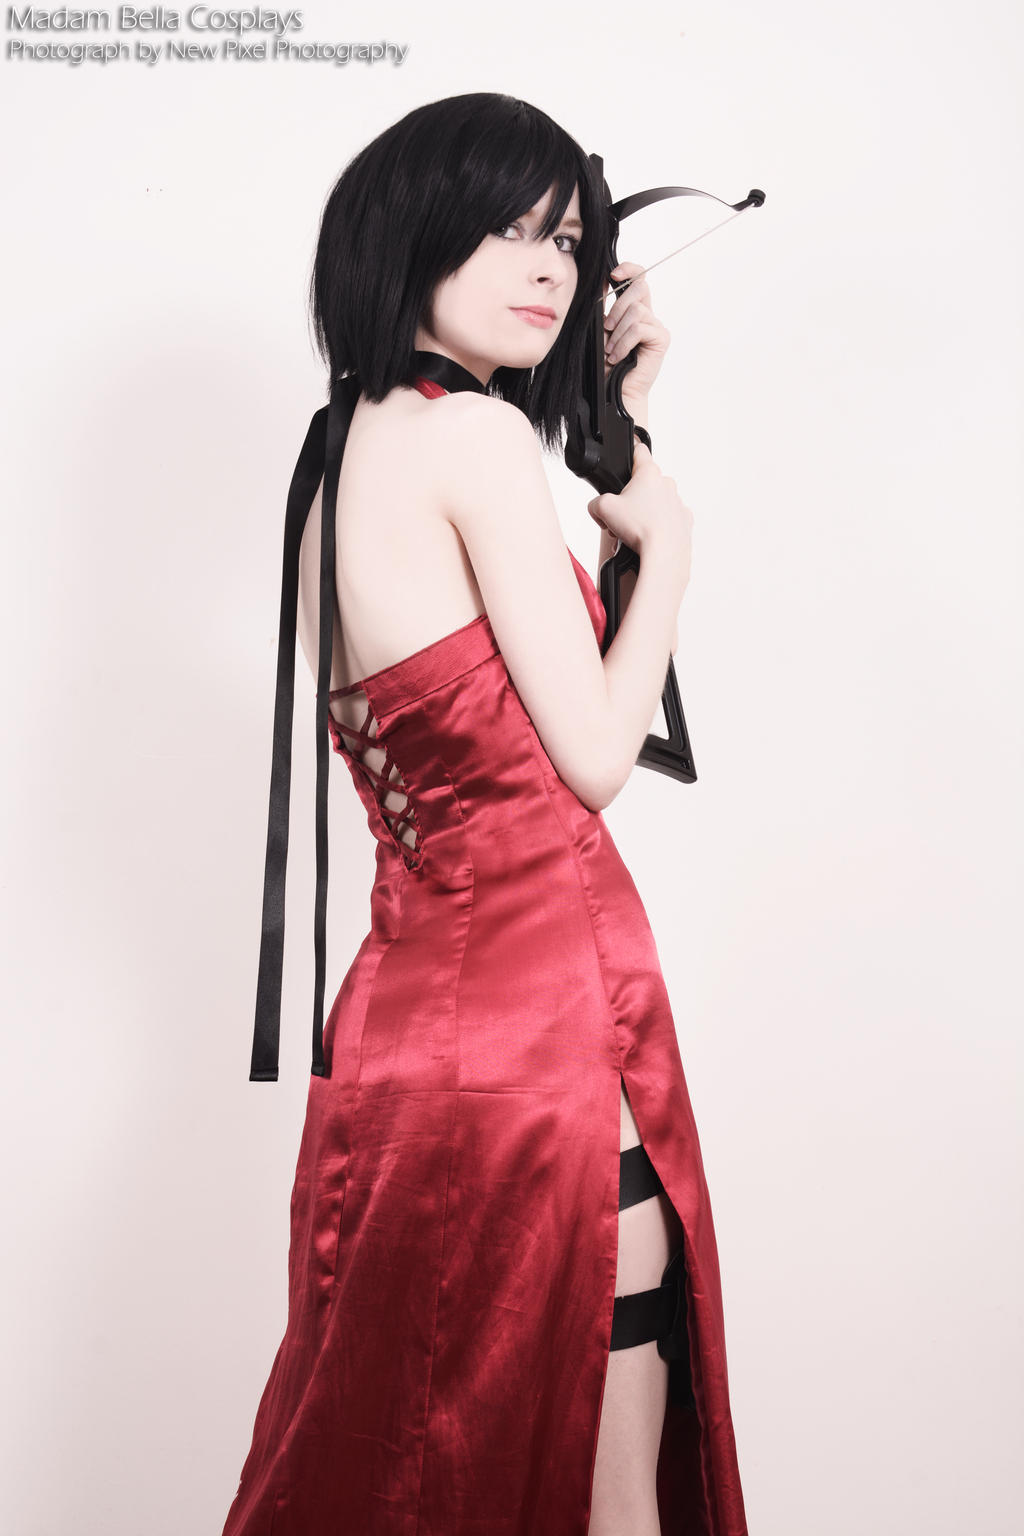 My low-budget Ada Wong (Resident Evil 4 Remake) cosplay 😎 : r/crossdressing